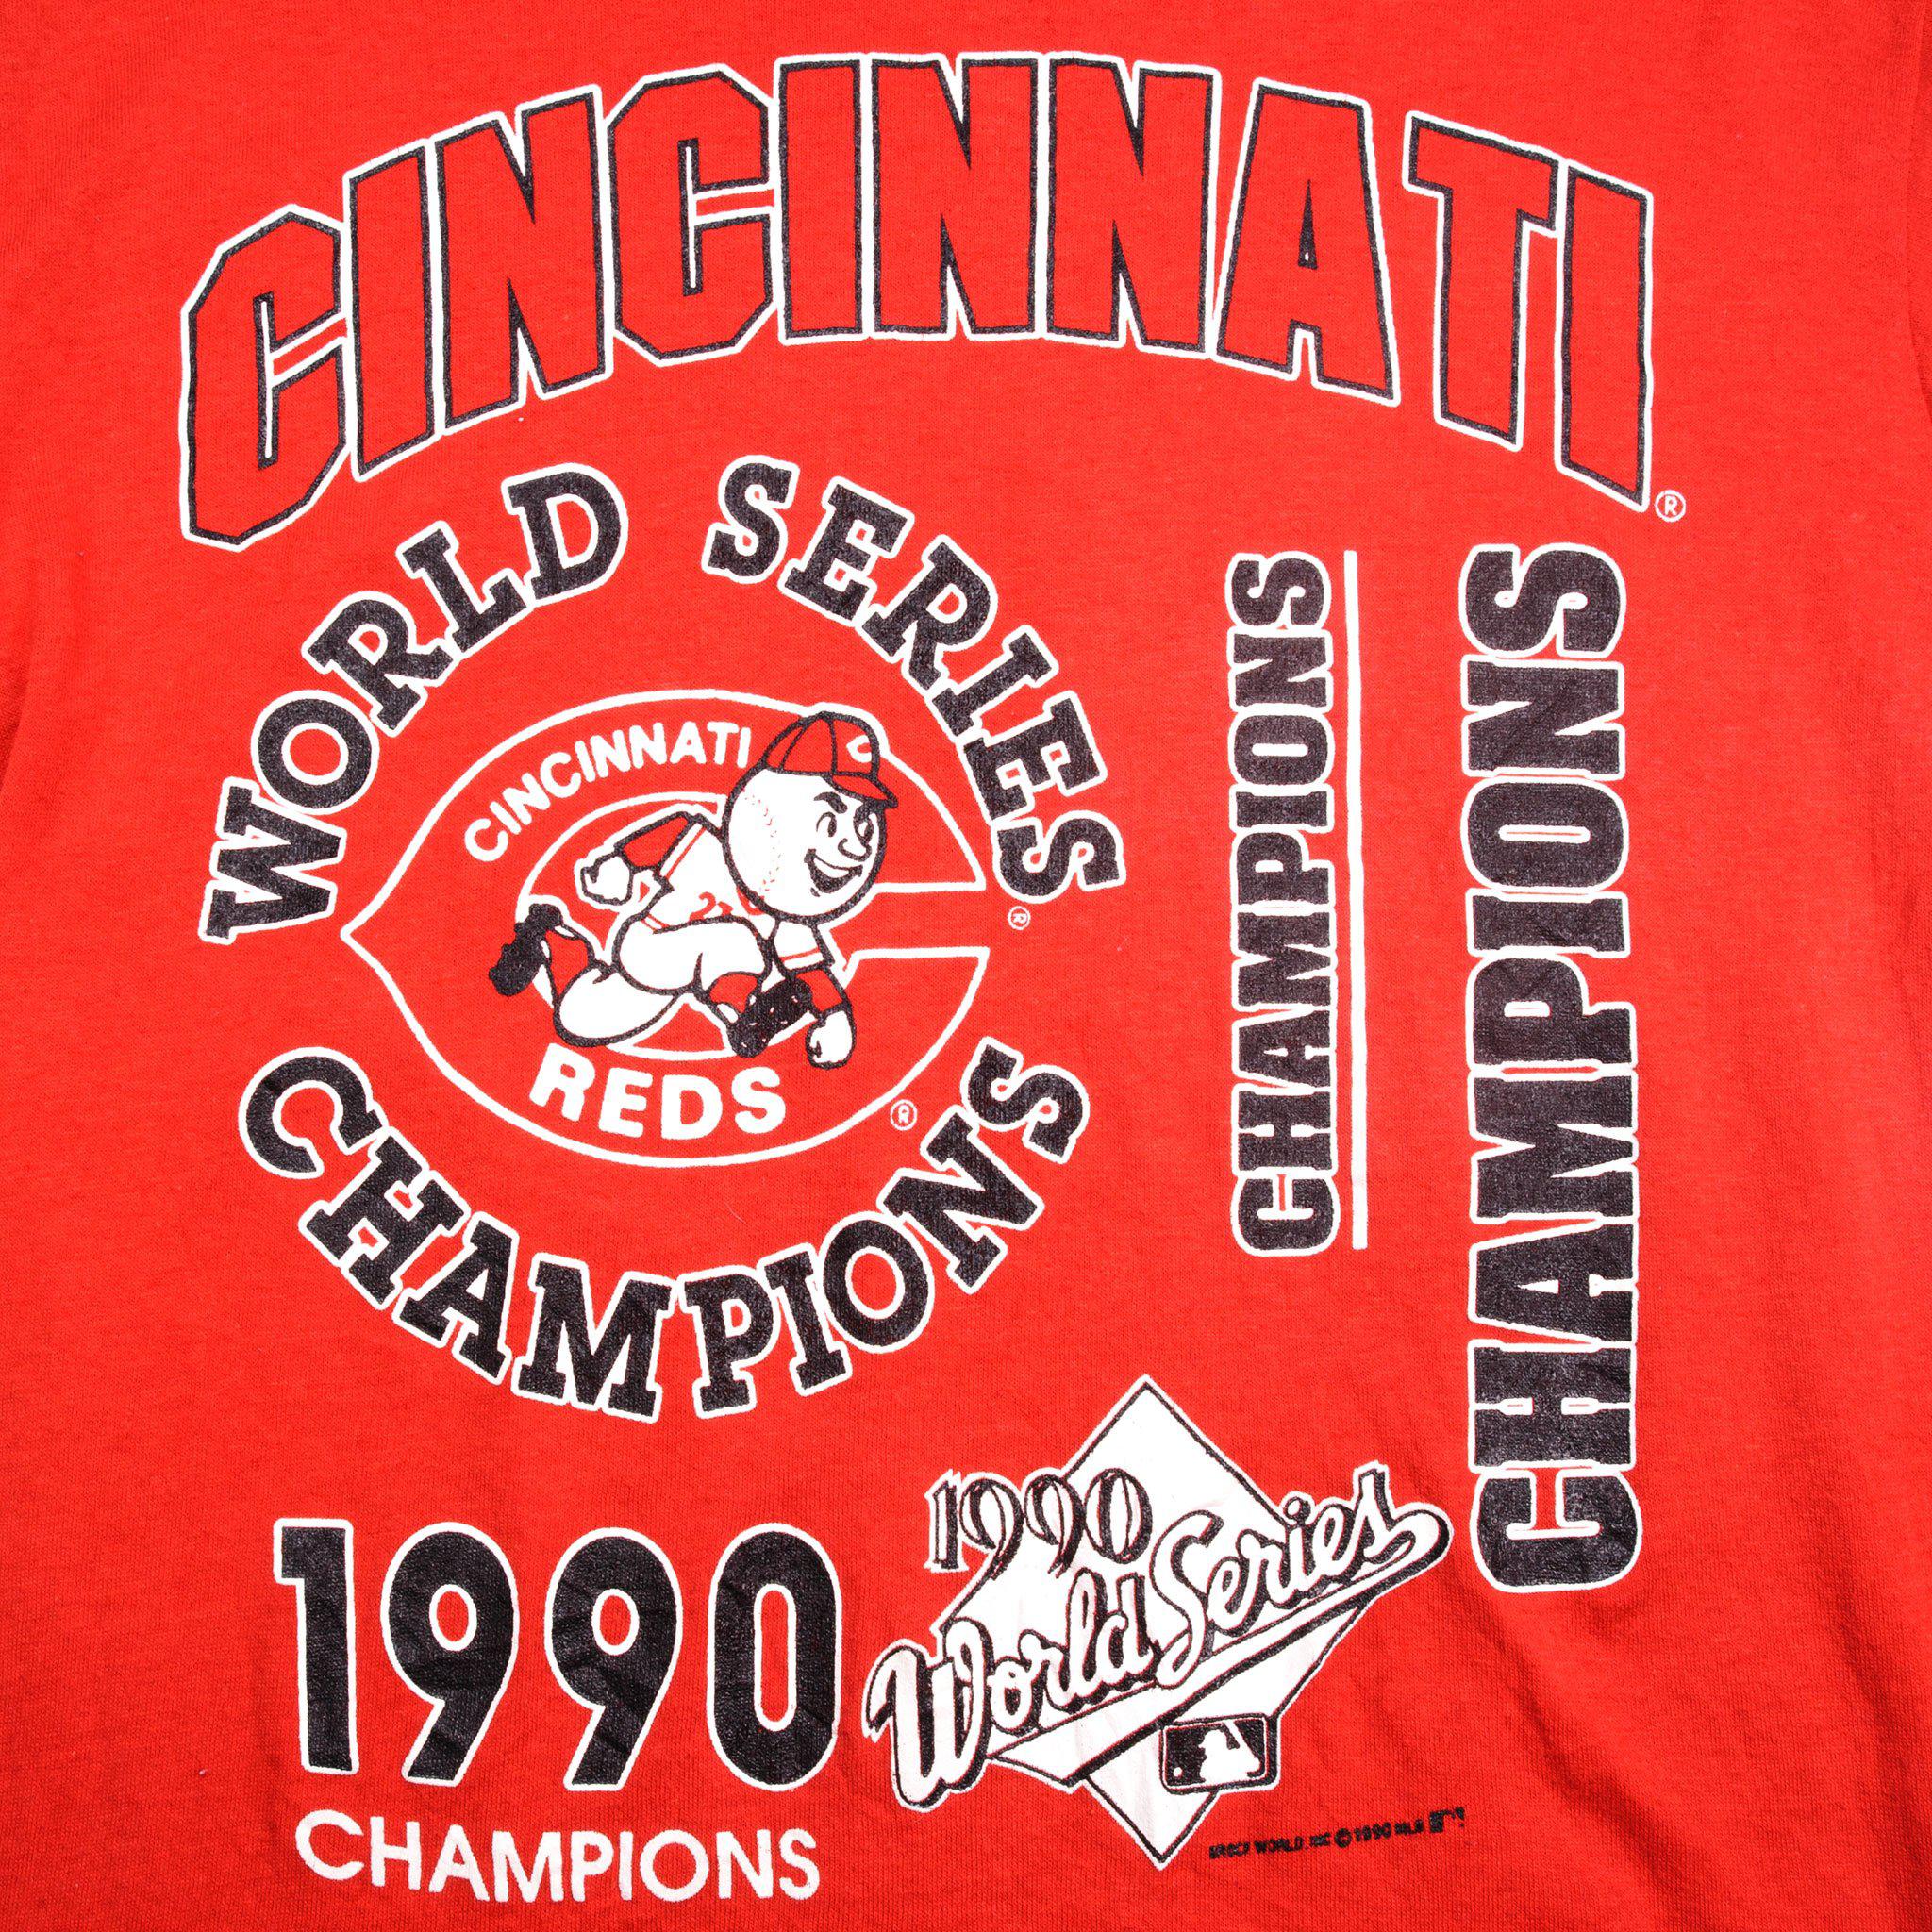 Vintage 1990 MLB Cincinnati Reds World Series Champions T-shirt Made in USA